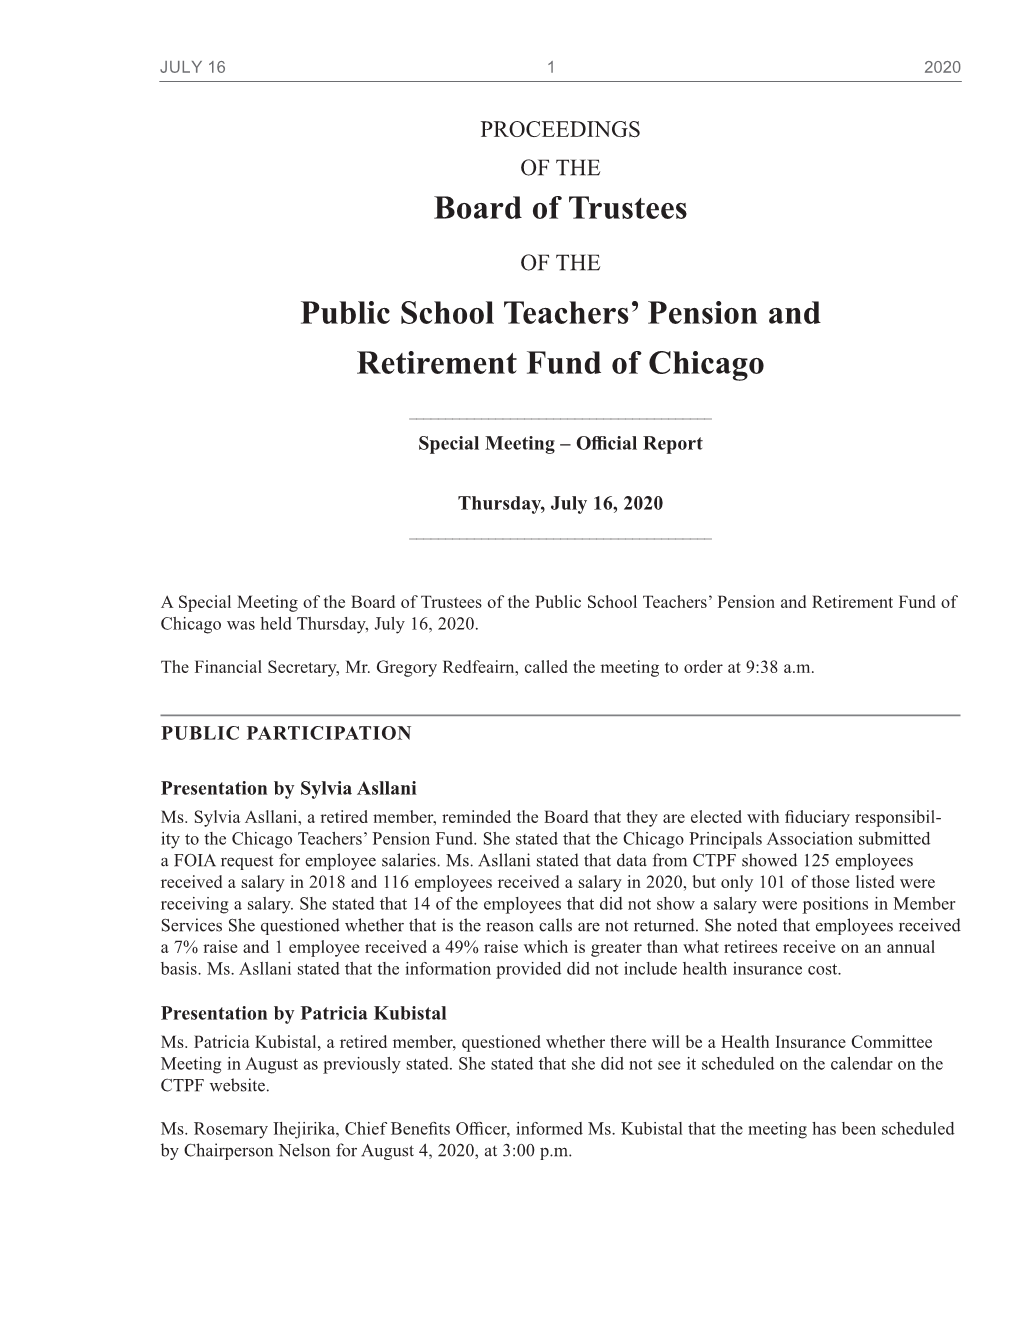 Board of Trustees Public School Teachers' Pension and Retirement